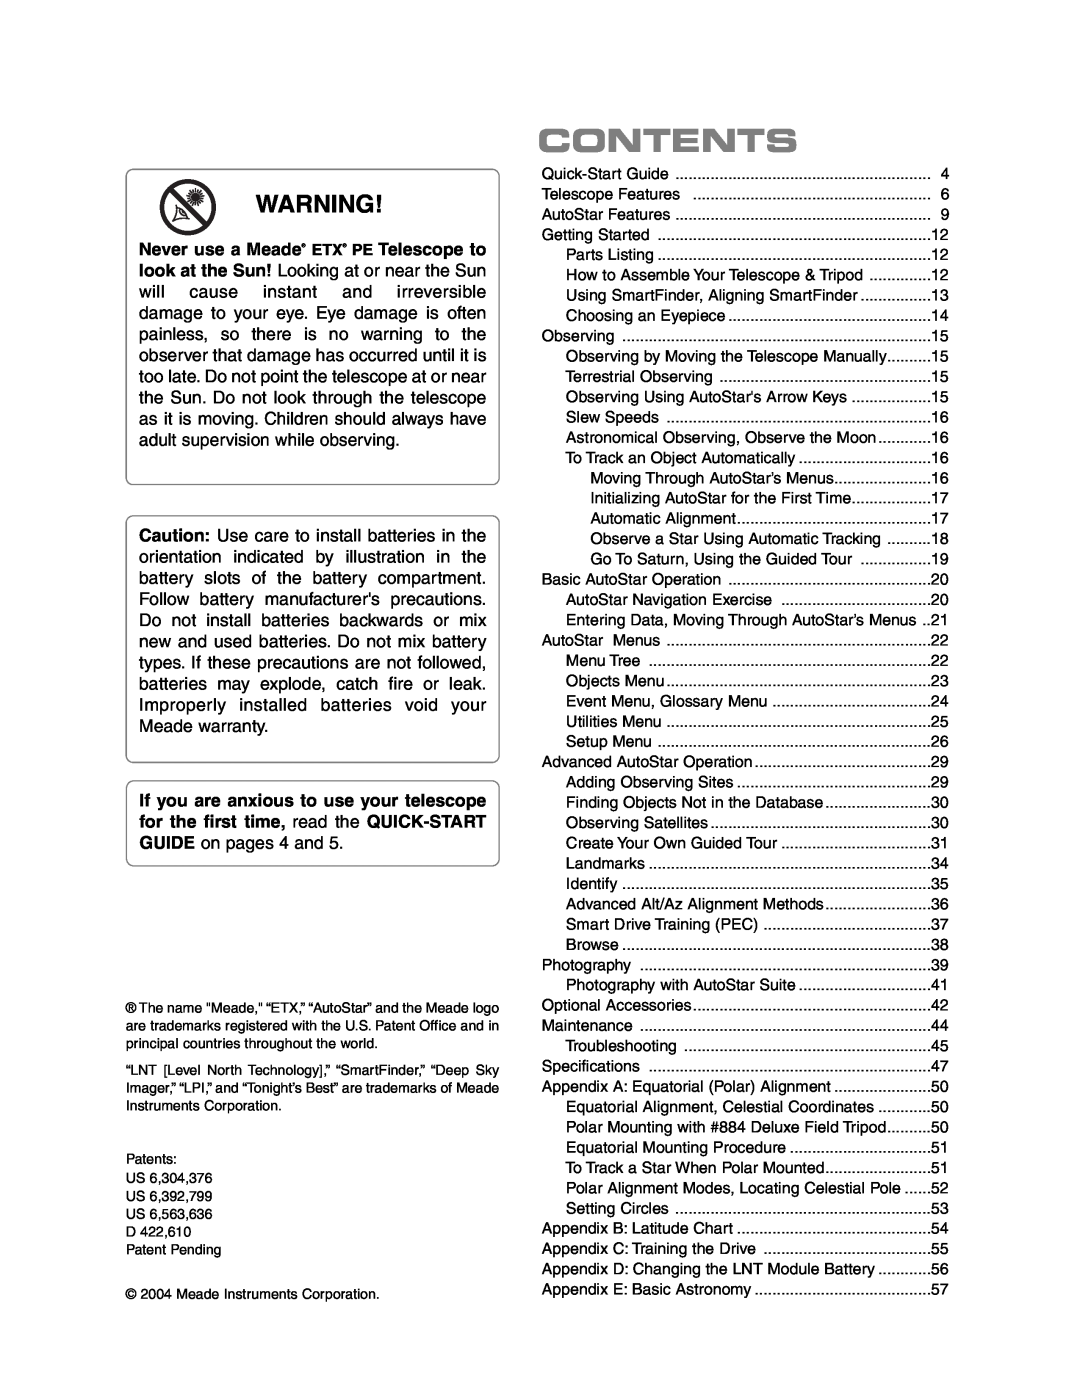 Meade ETX-90PE instruction manual Contents 